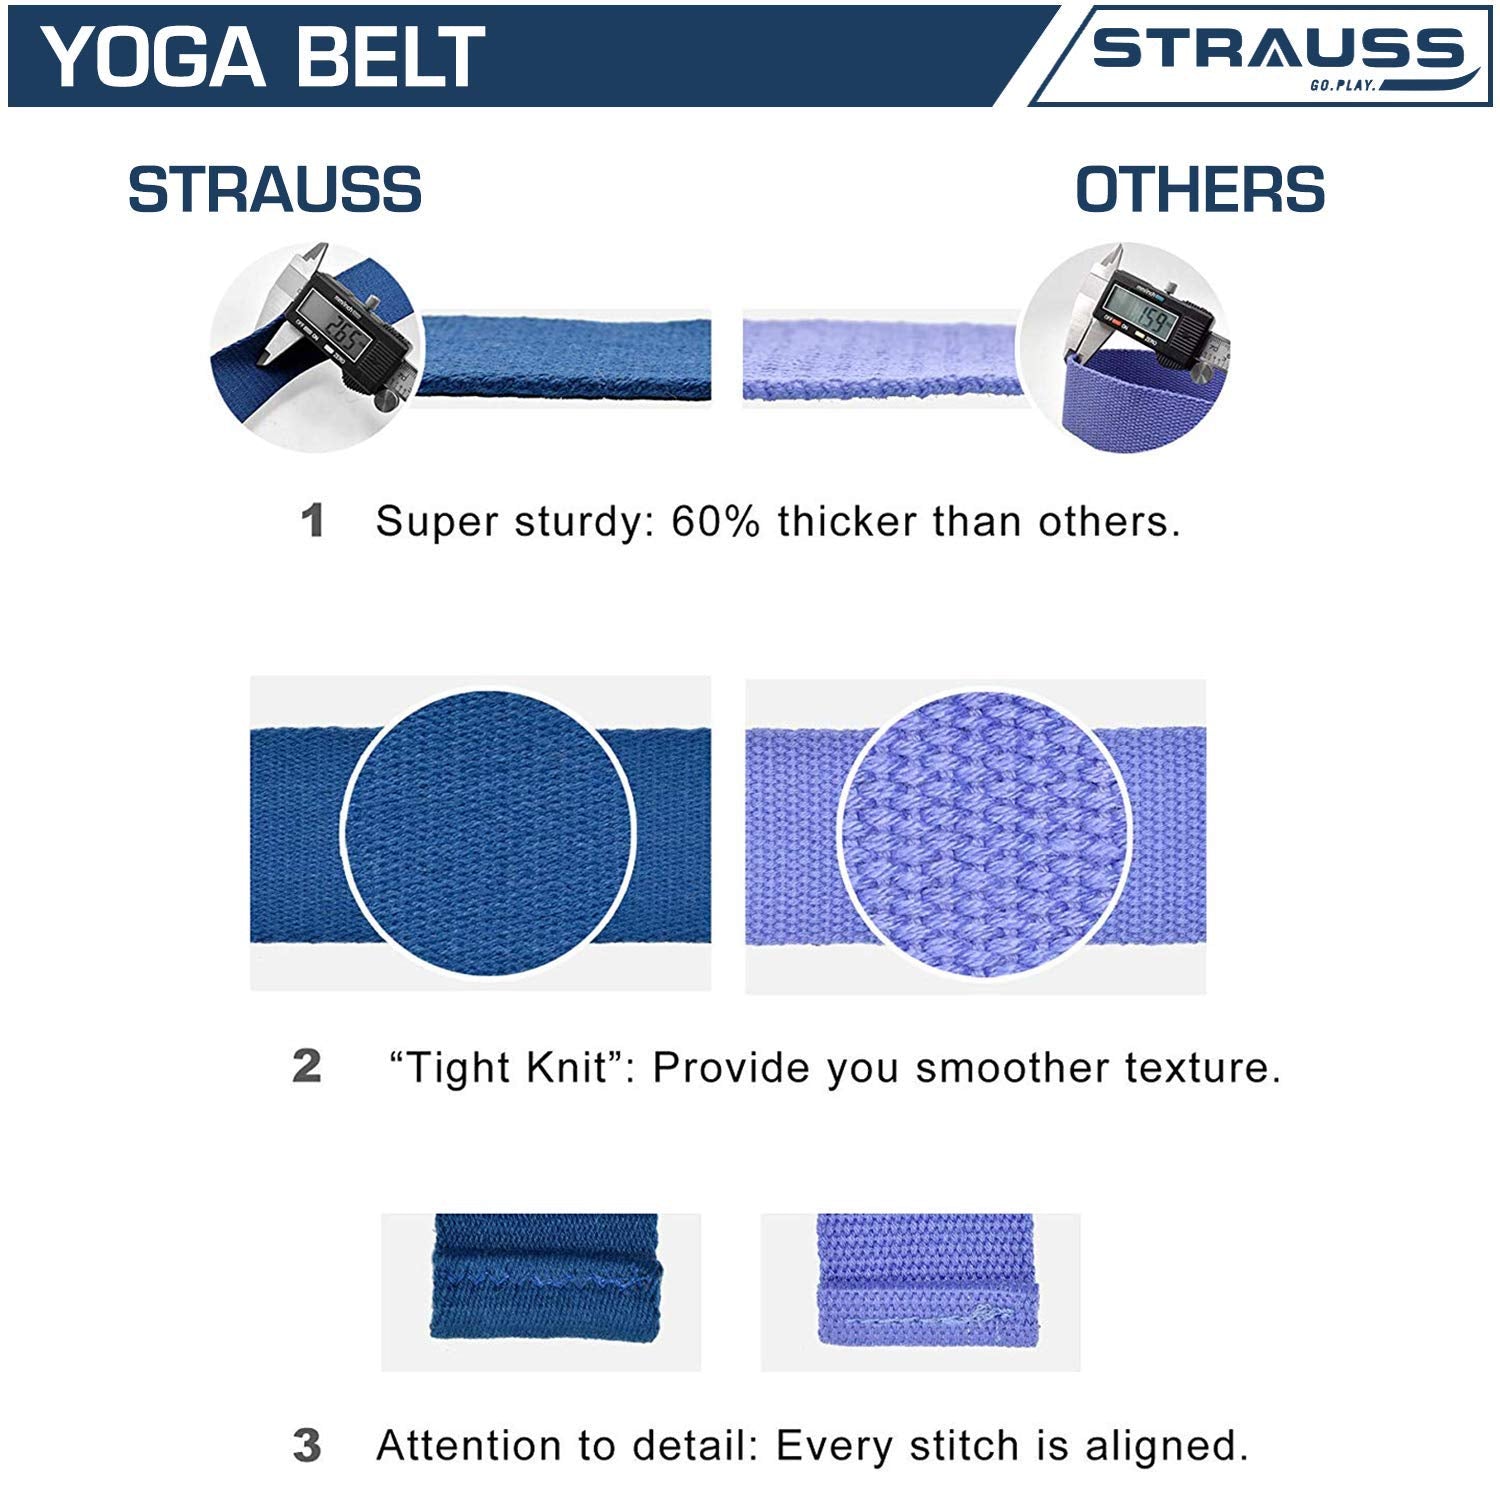 Strauss Yoga Mat 6mm (Blue), Yoga Block (Navy Blue) Pair and Yoga Belt (Blue)